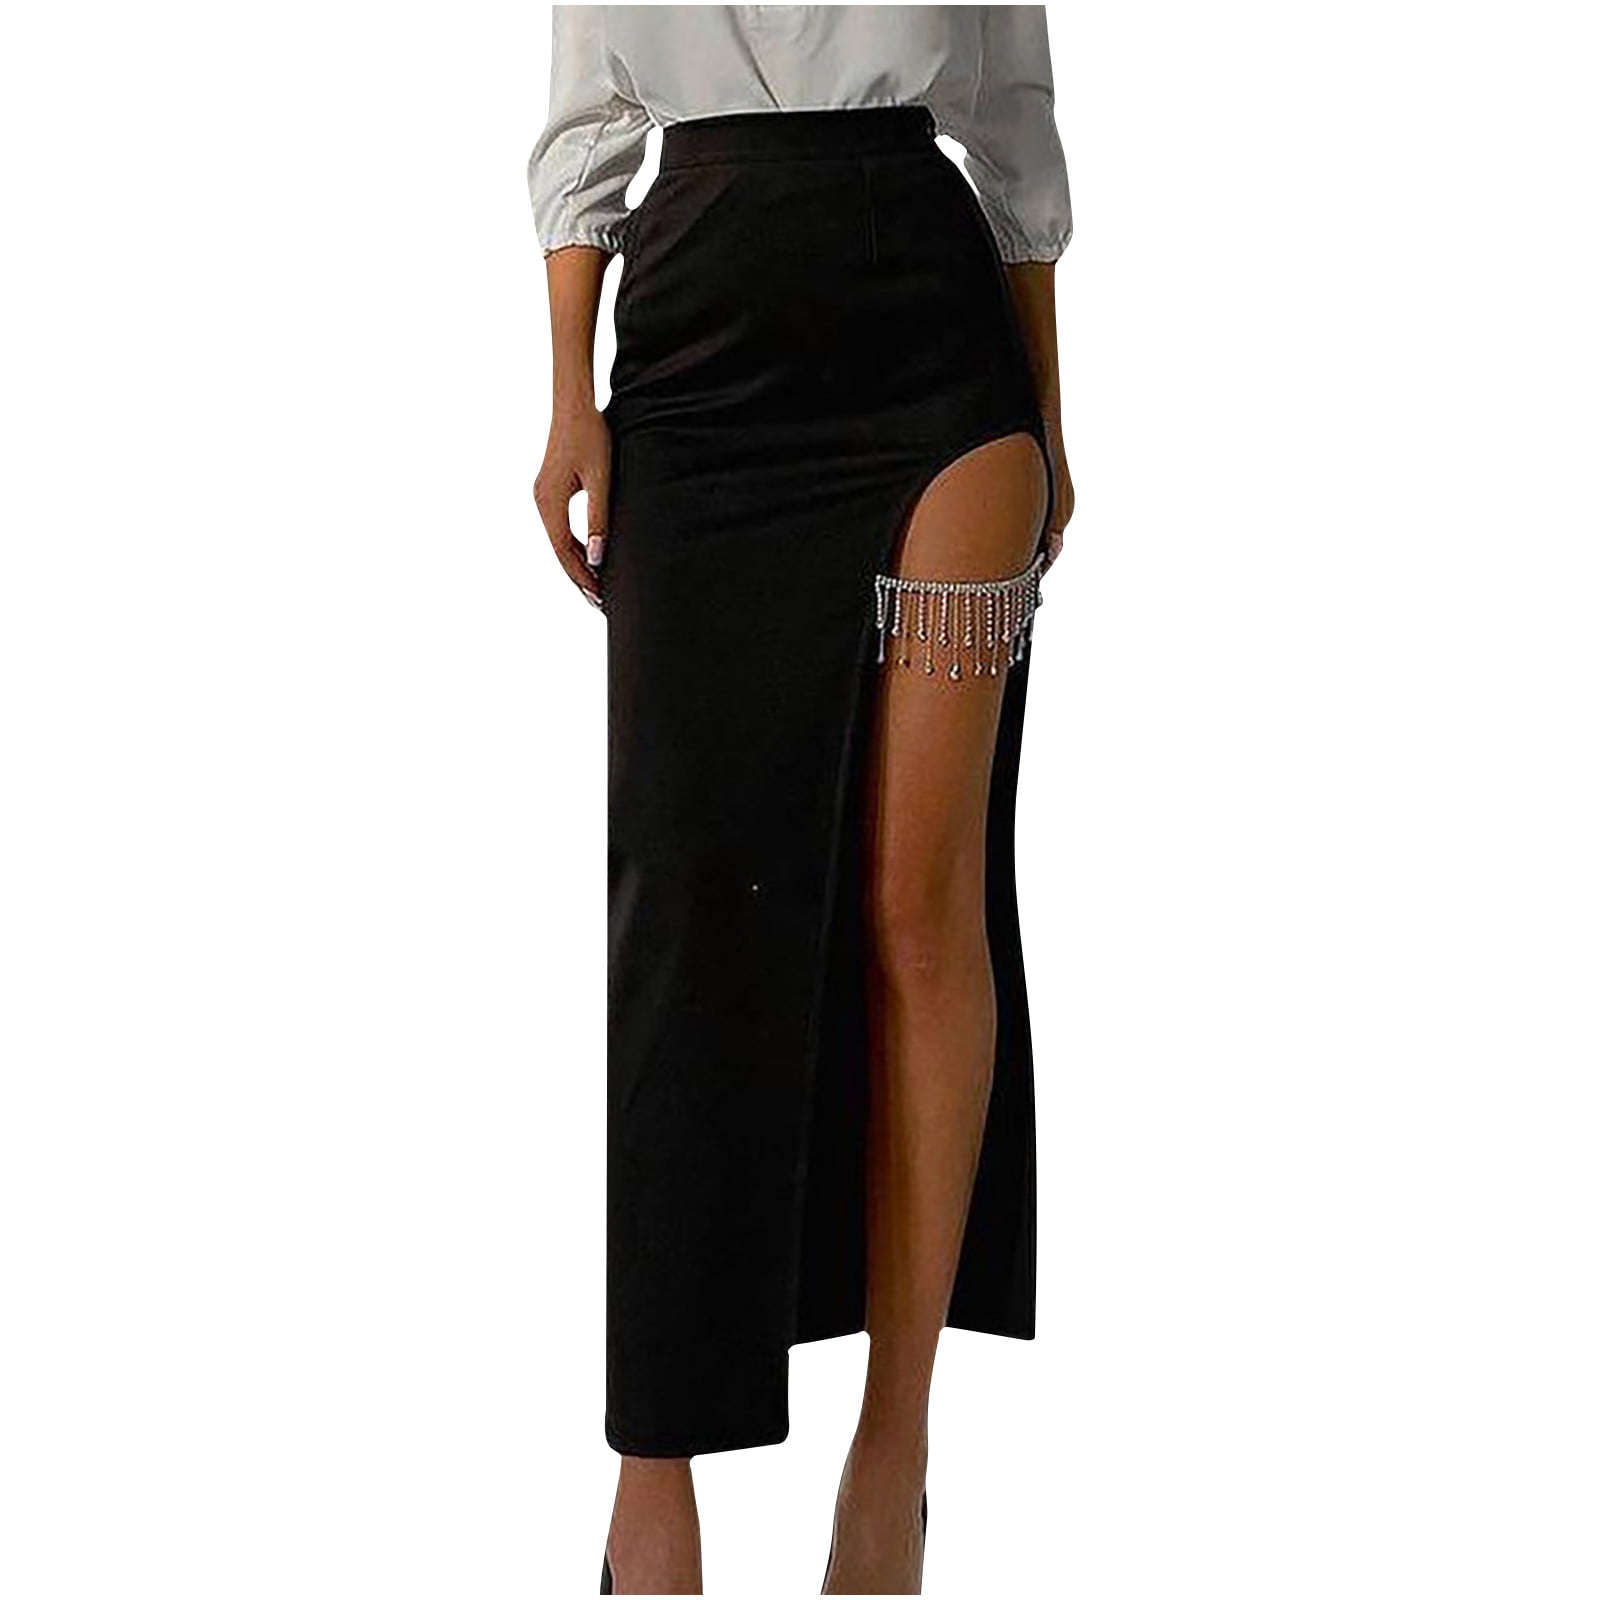 ACSUSS Women PU Leather Solid Tassel Fringe Hippie Boho High Waist Adjustable Belt Skirt 